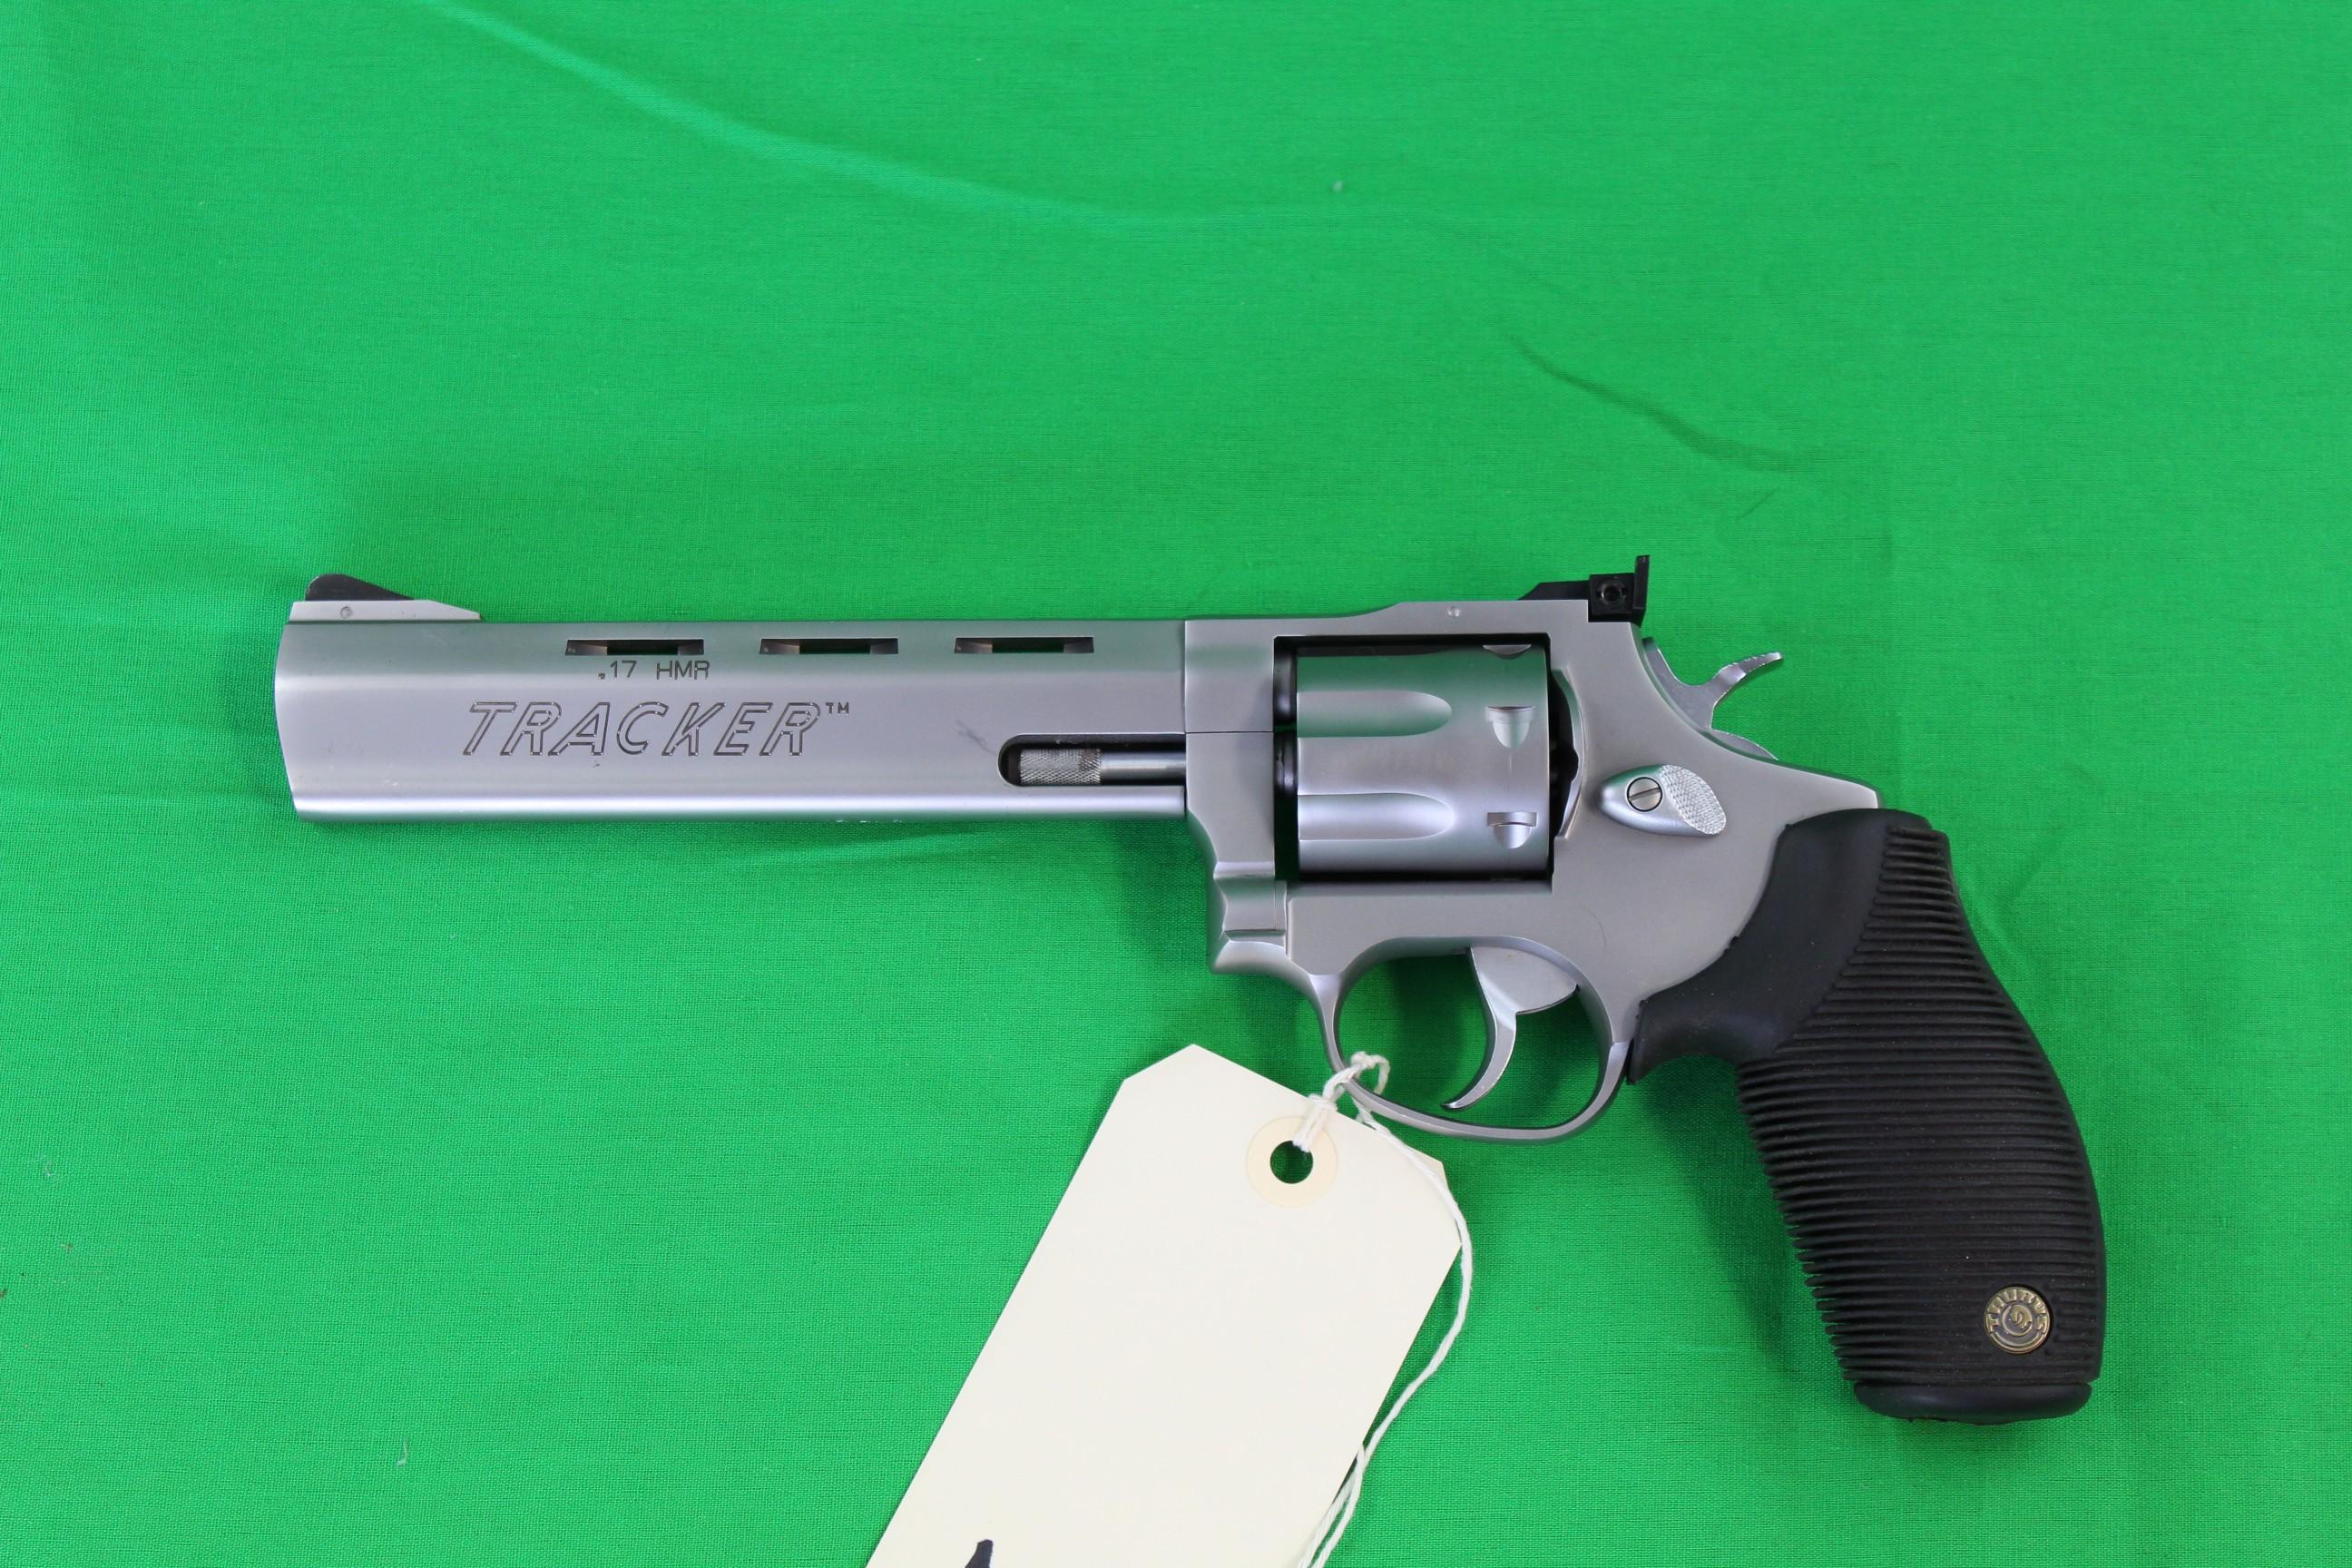 Taurus Tracker 17 HMR Revolver, s/n VK991925